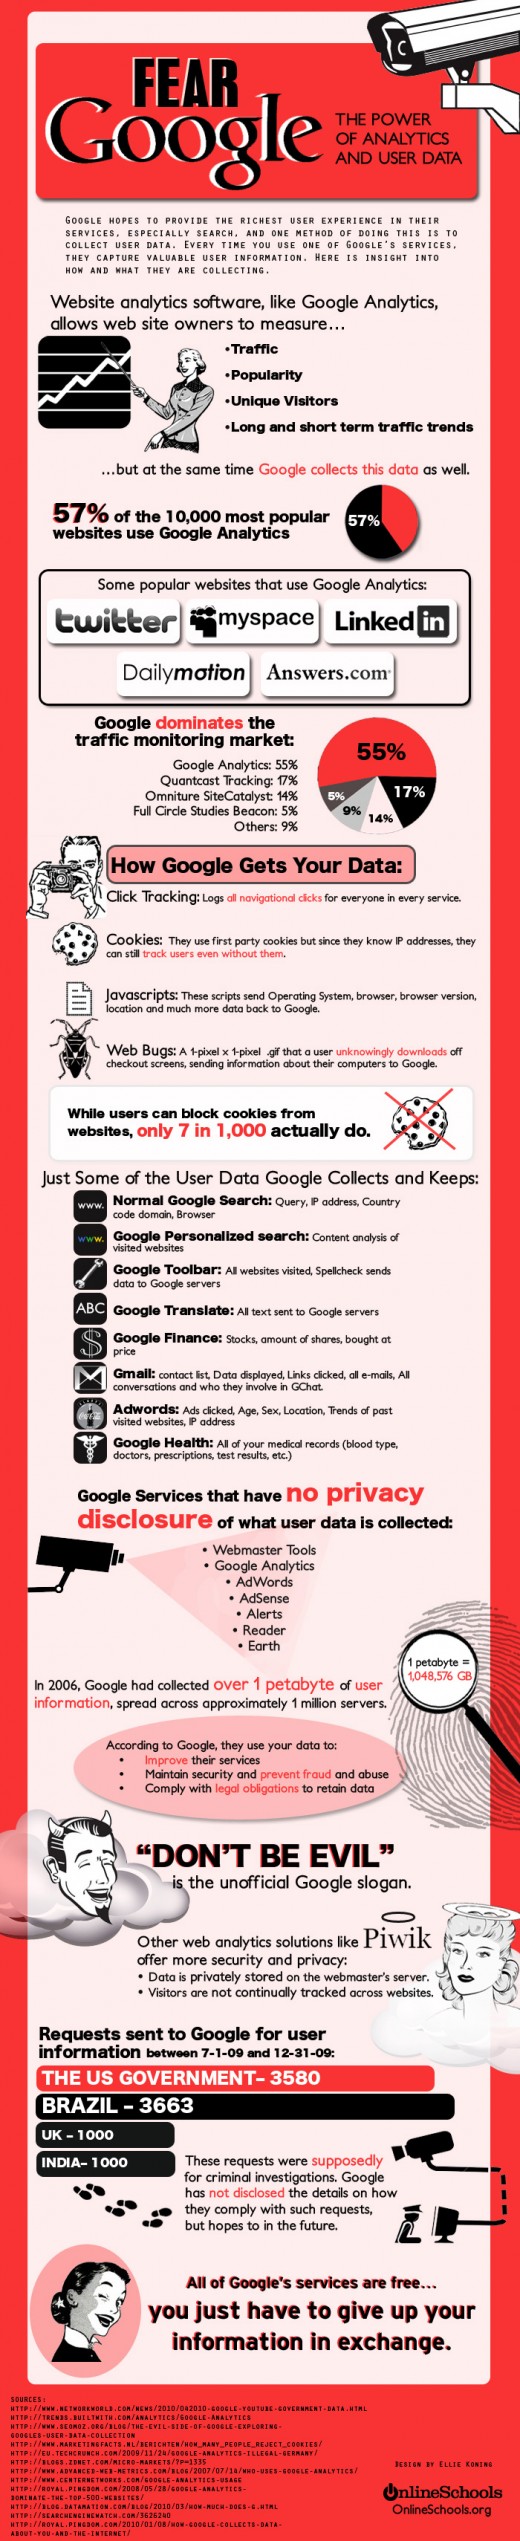 Google, Illuminati and the Cybersheep | HubPages